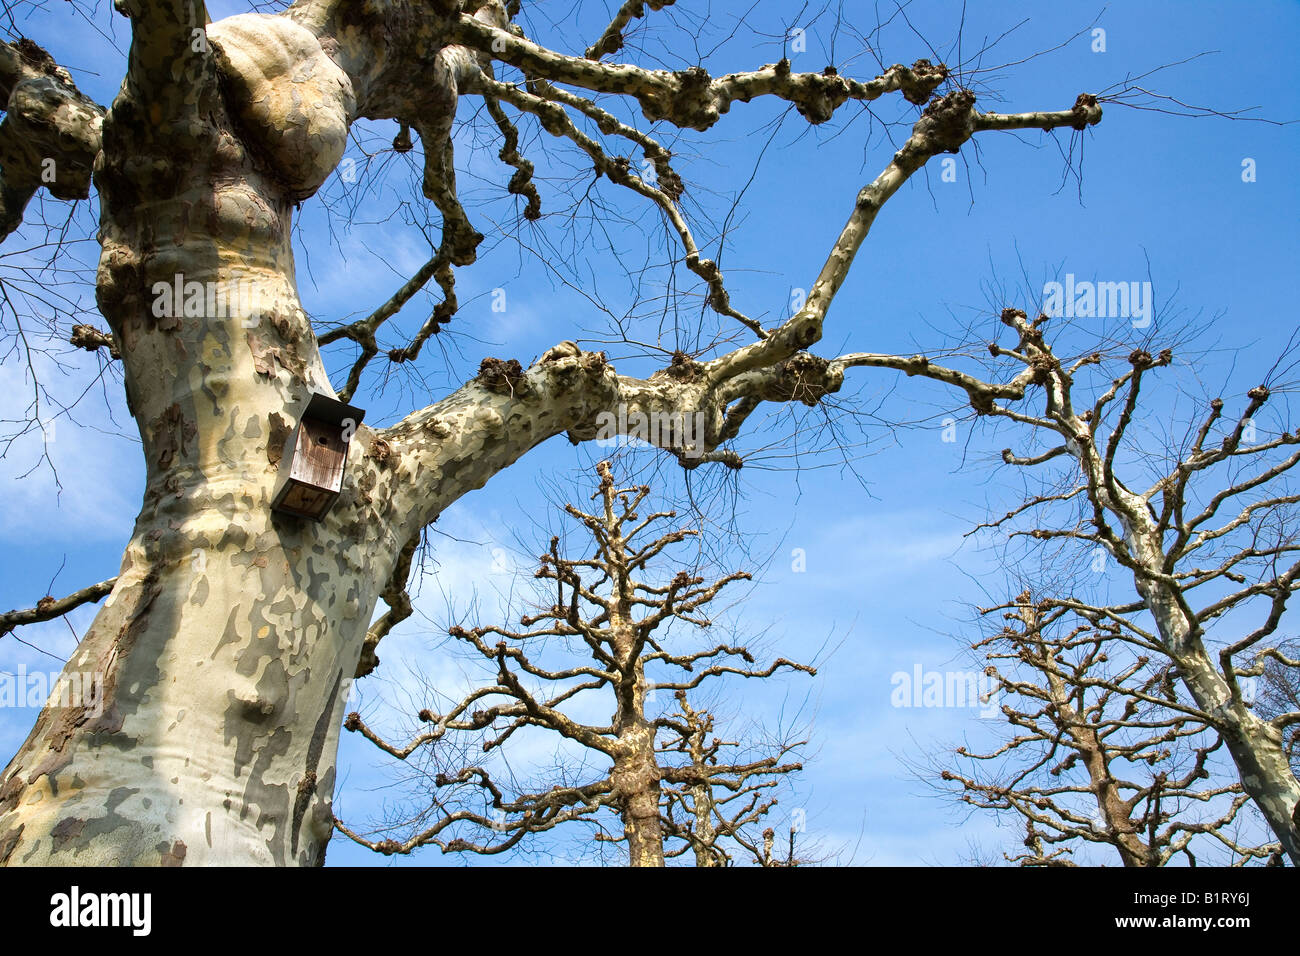 Plane or Sycamore Trees (Platanus acerifolia) with birdhouse Stock Photo